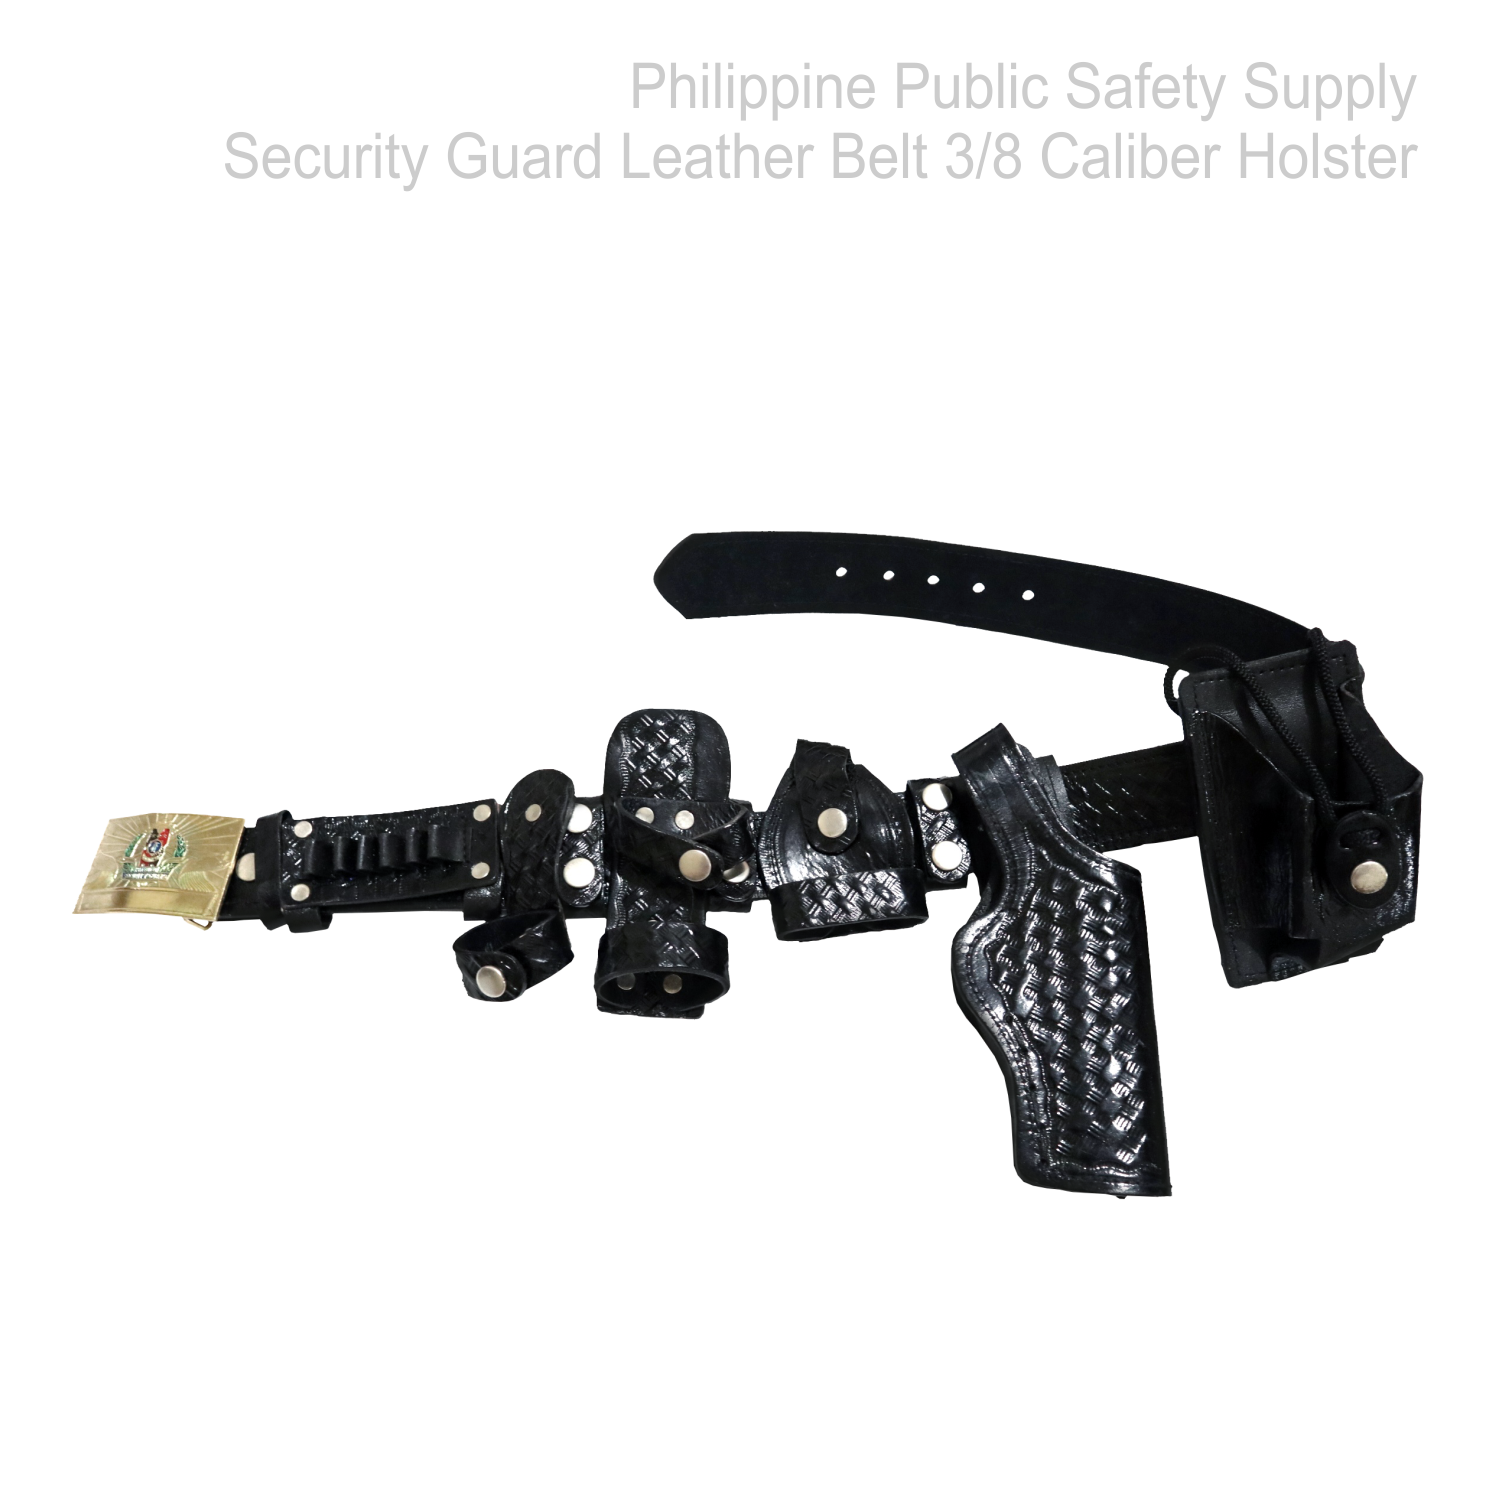 Security Guard Leather Belt 3/8  Caliber Holster - PSA-SG